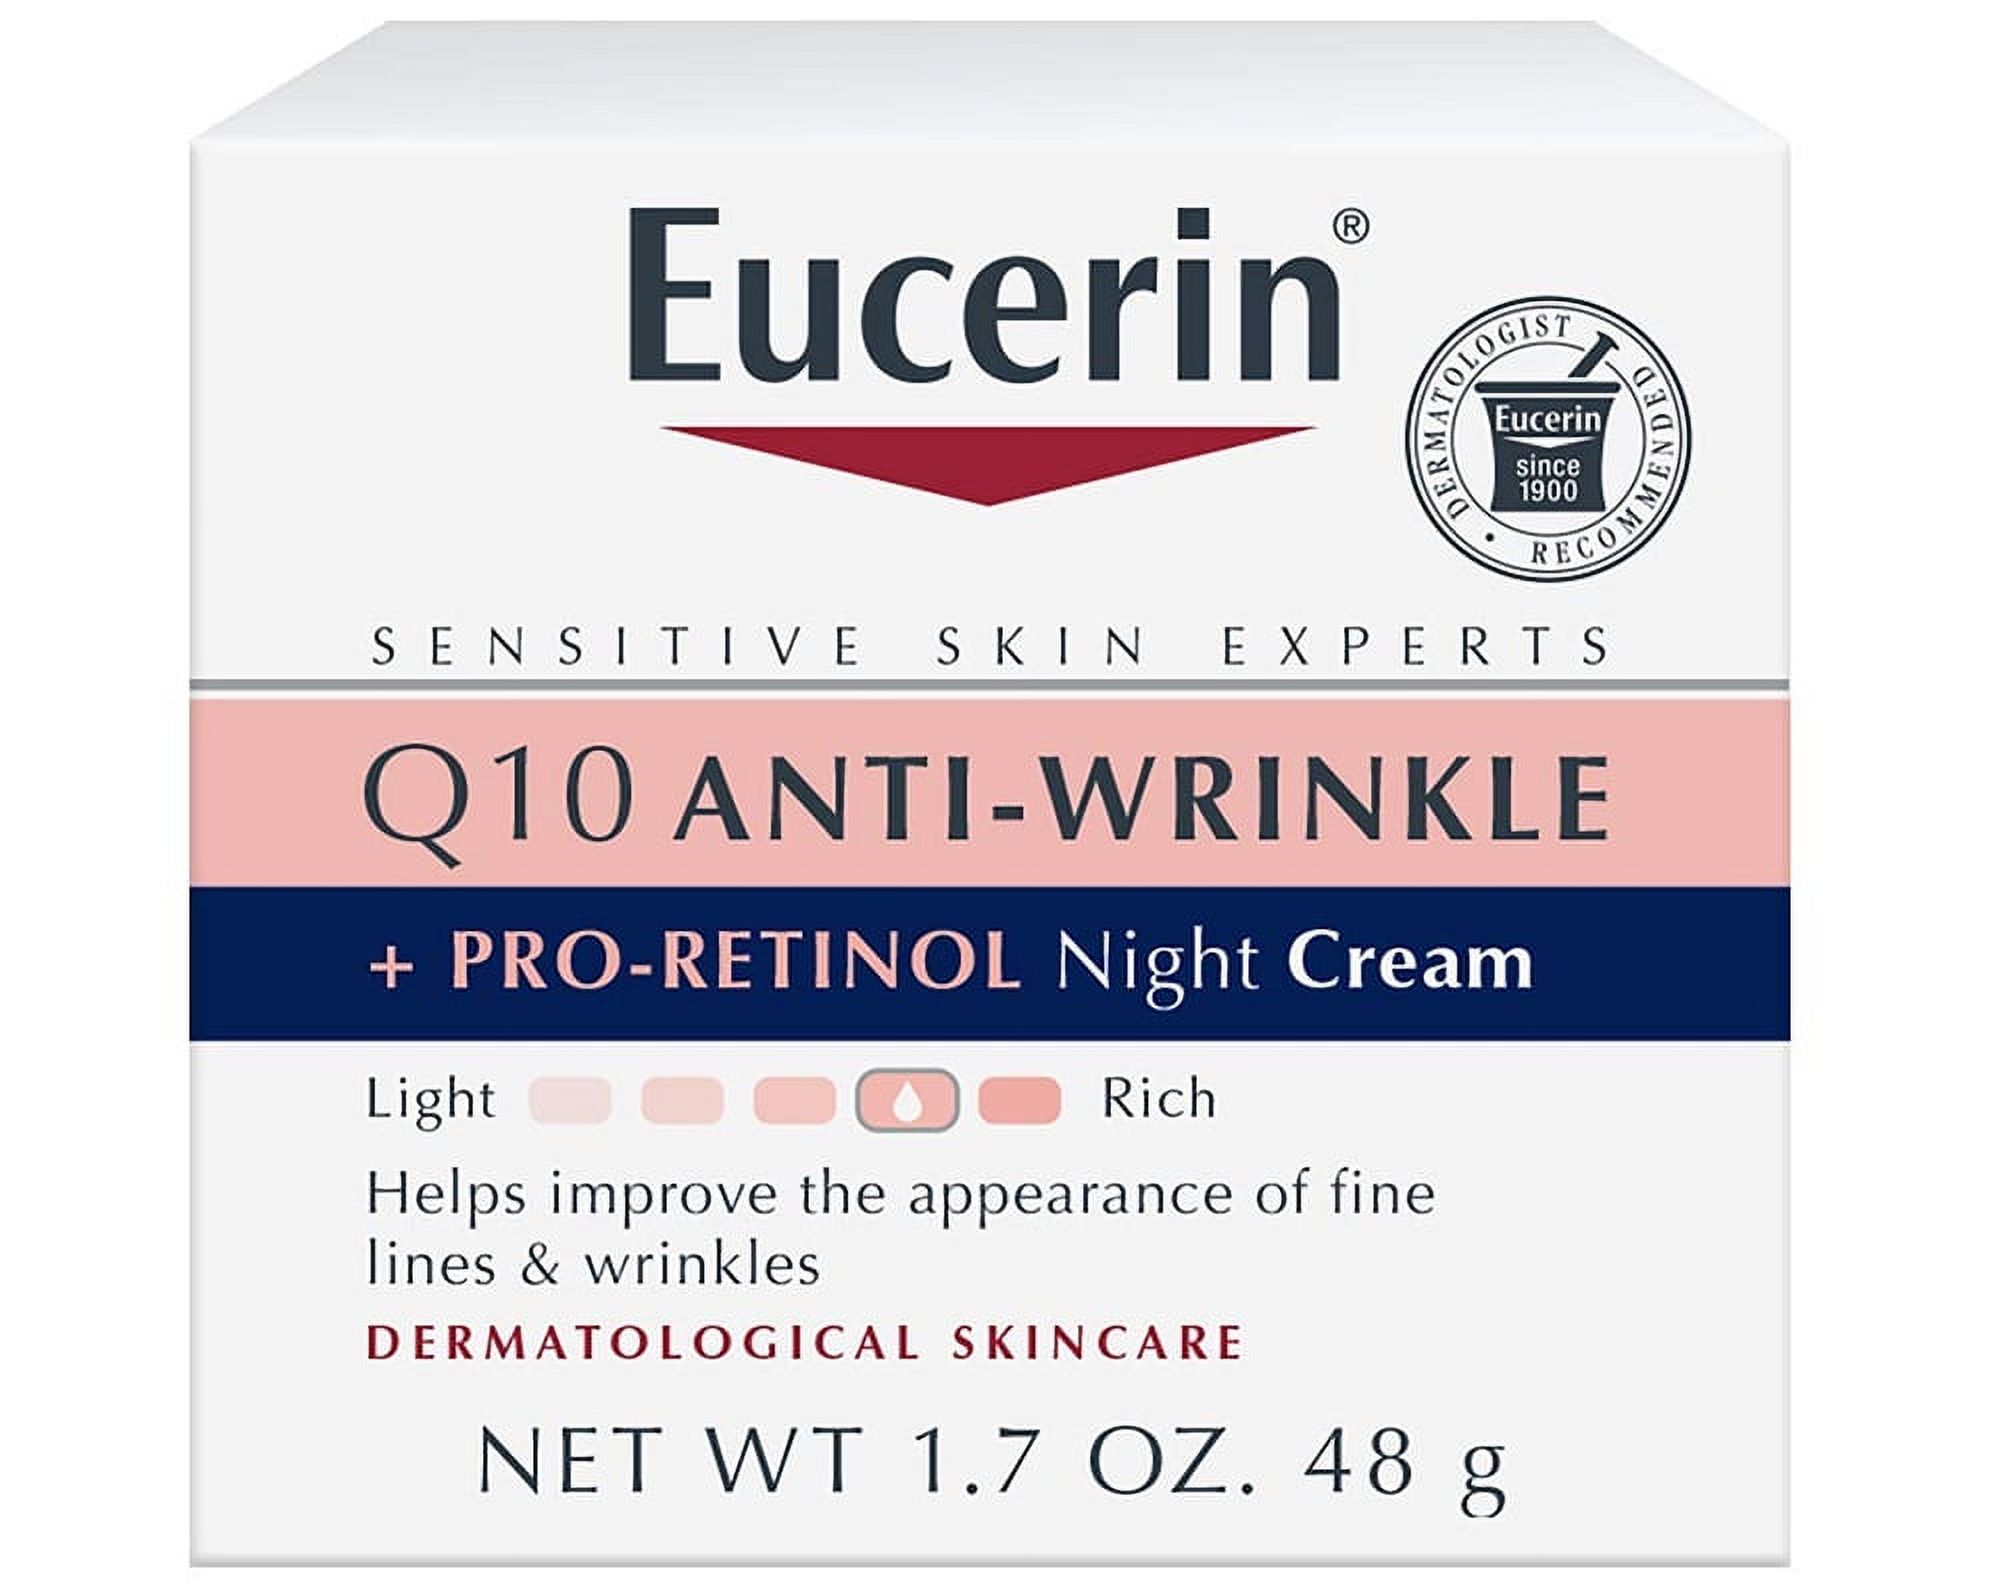 Eucerin Q10 Anti-Wrinkle Night Cream + Pro-Retinol, Facial Cream for Sensitive Skin, 1.7 Oz Jar - image 1 of 4